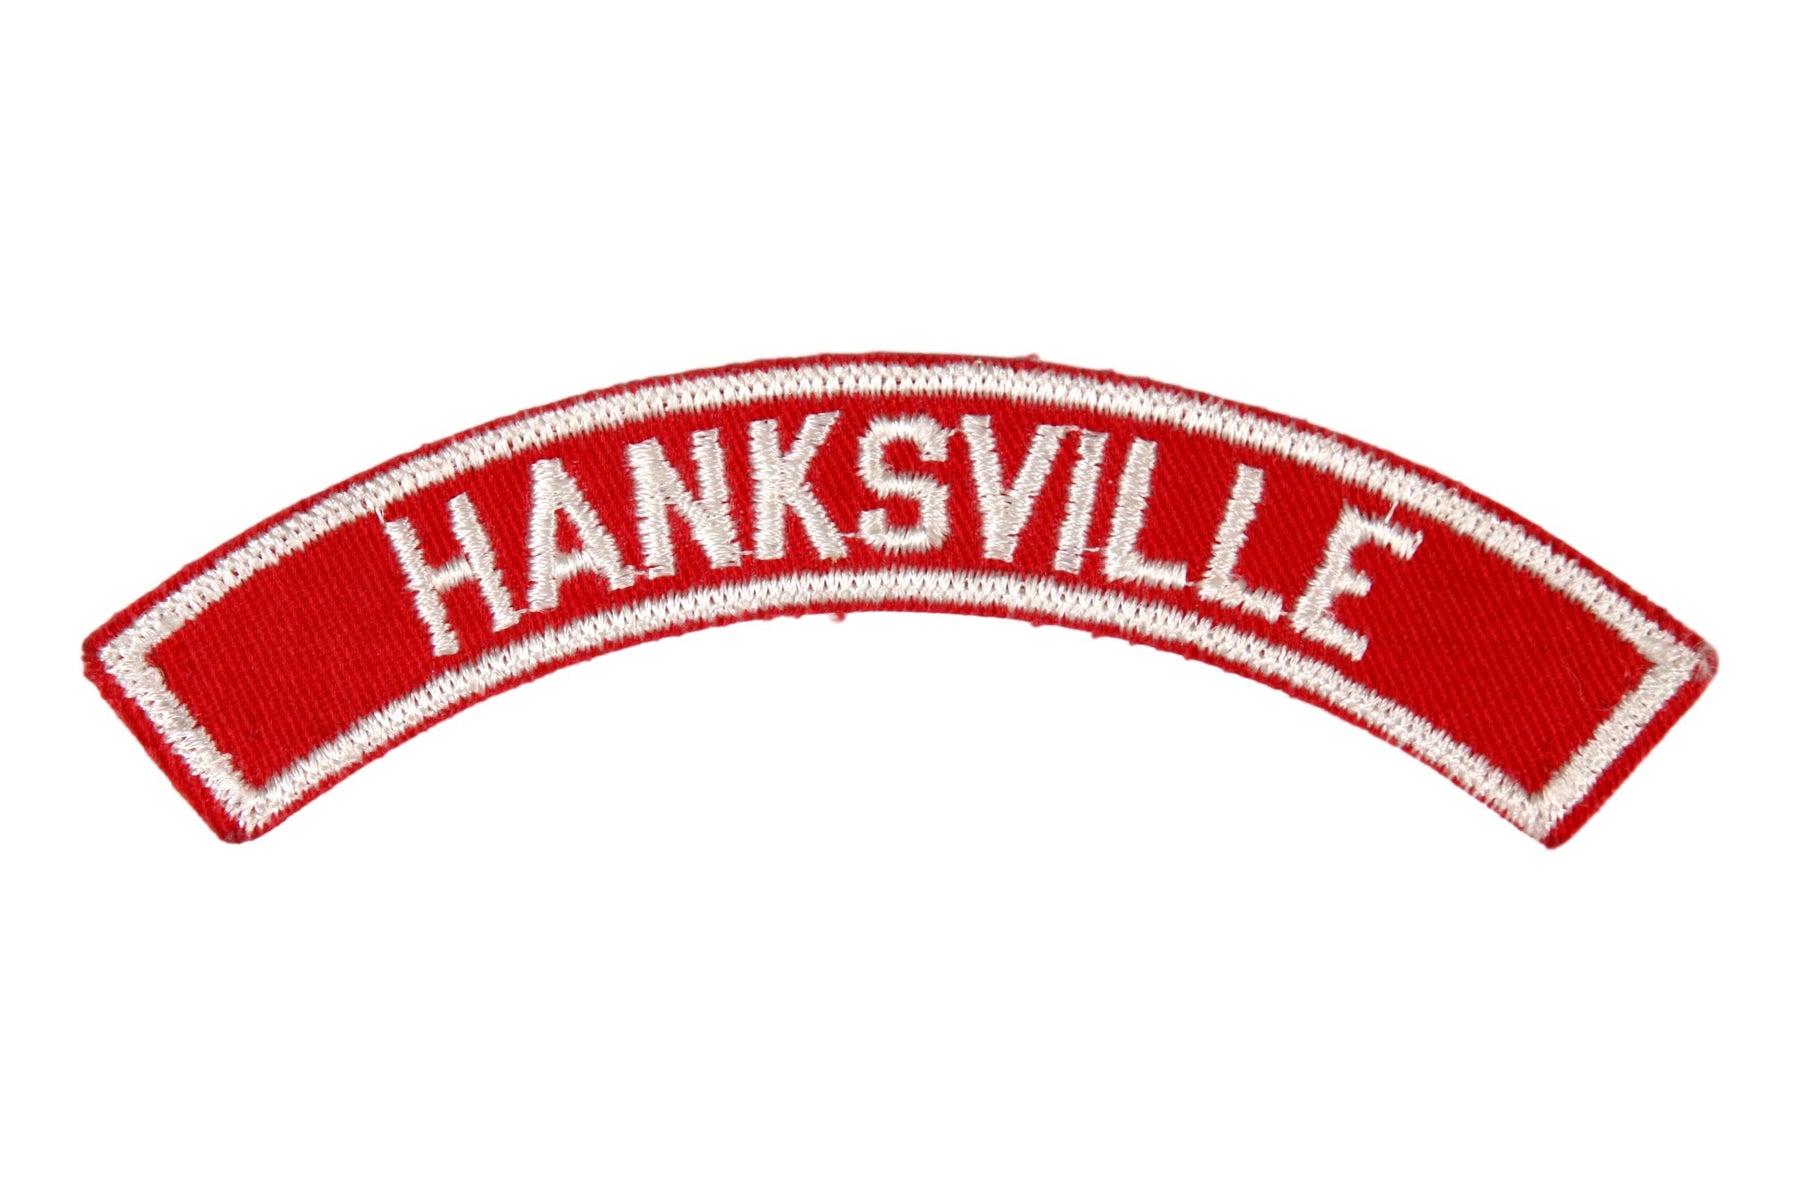 Hanksville Red and White City Strip